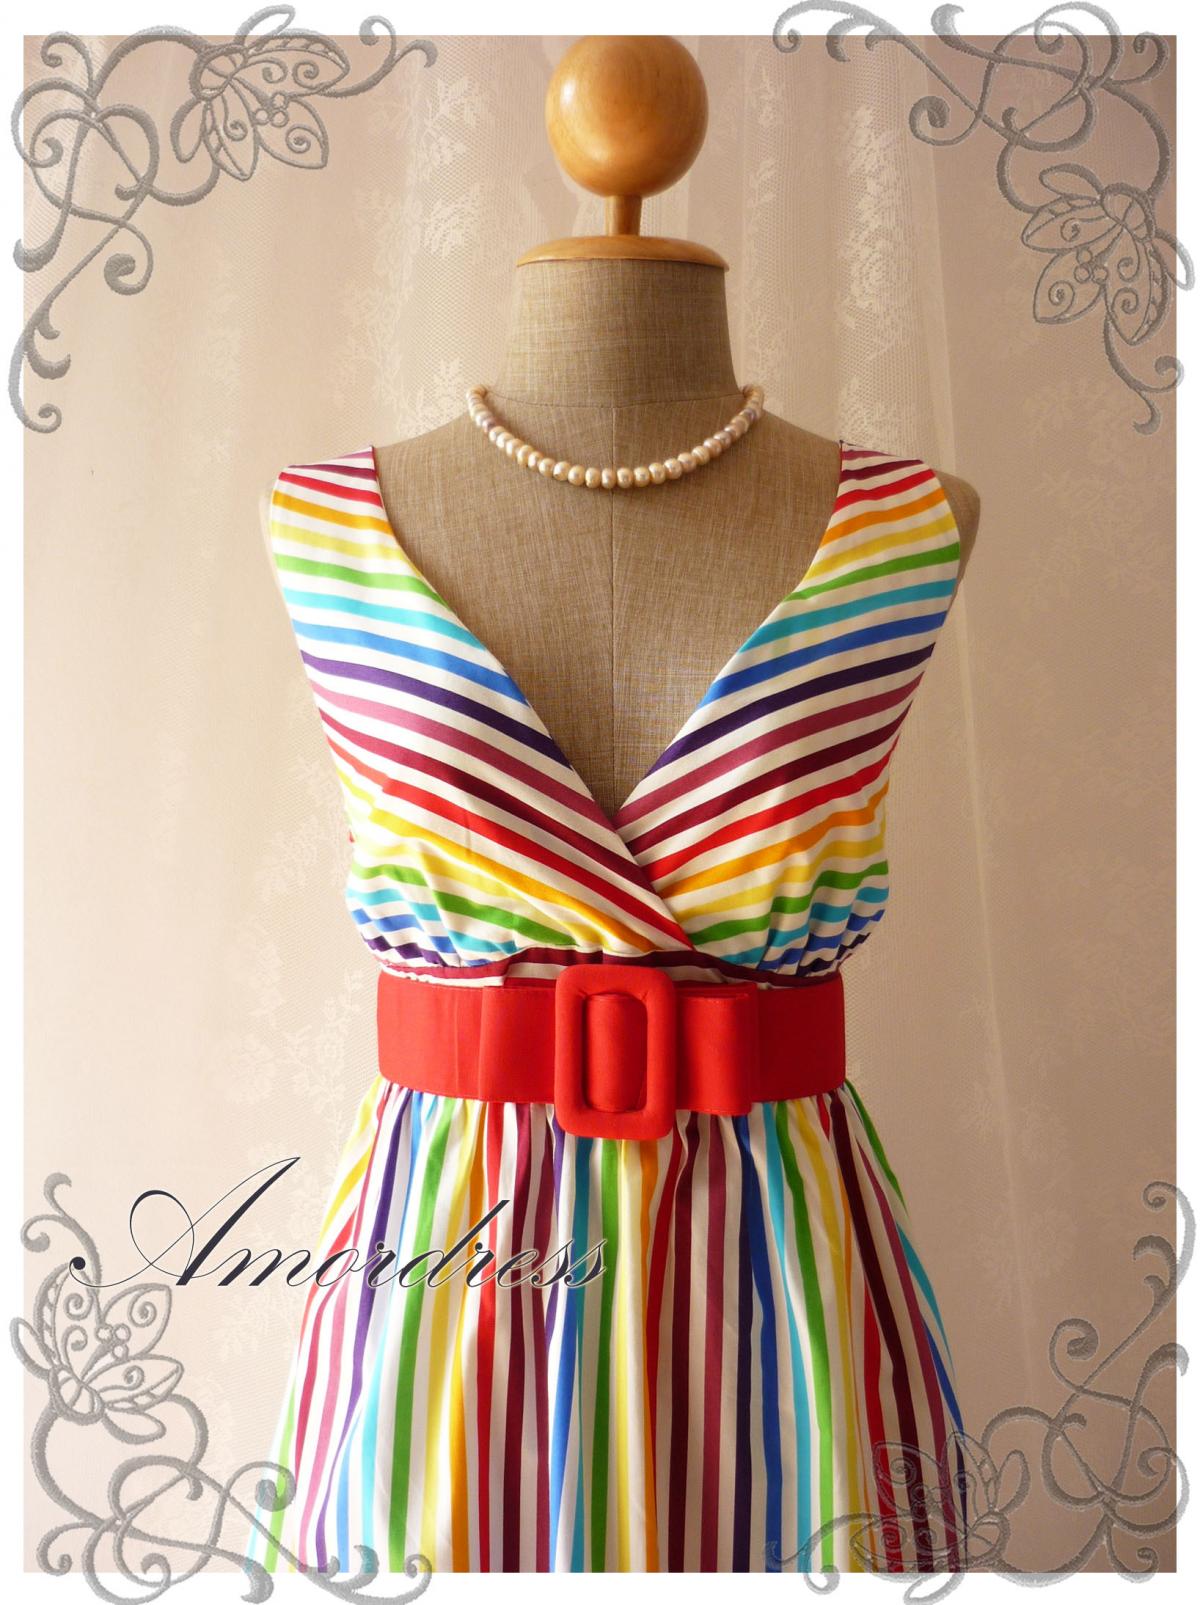 Rainbow Spectrum - Colorful Summer Dress Indigo Stripe Dress Party Popping Tea Dress Party Event Everyday Dress White Shade -s-m-